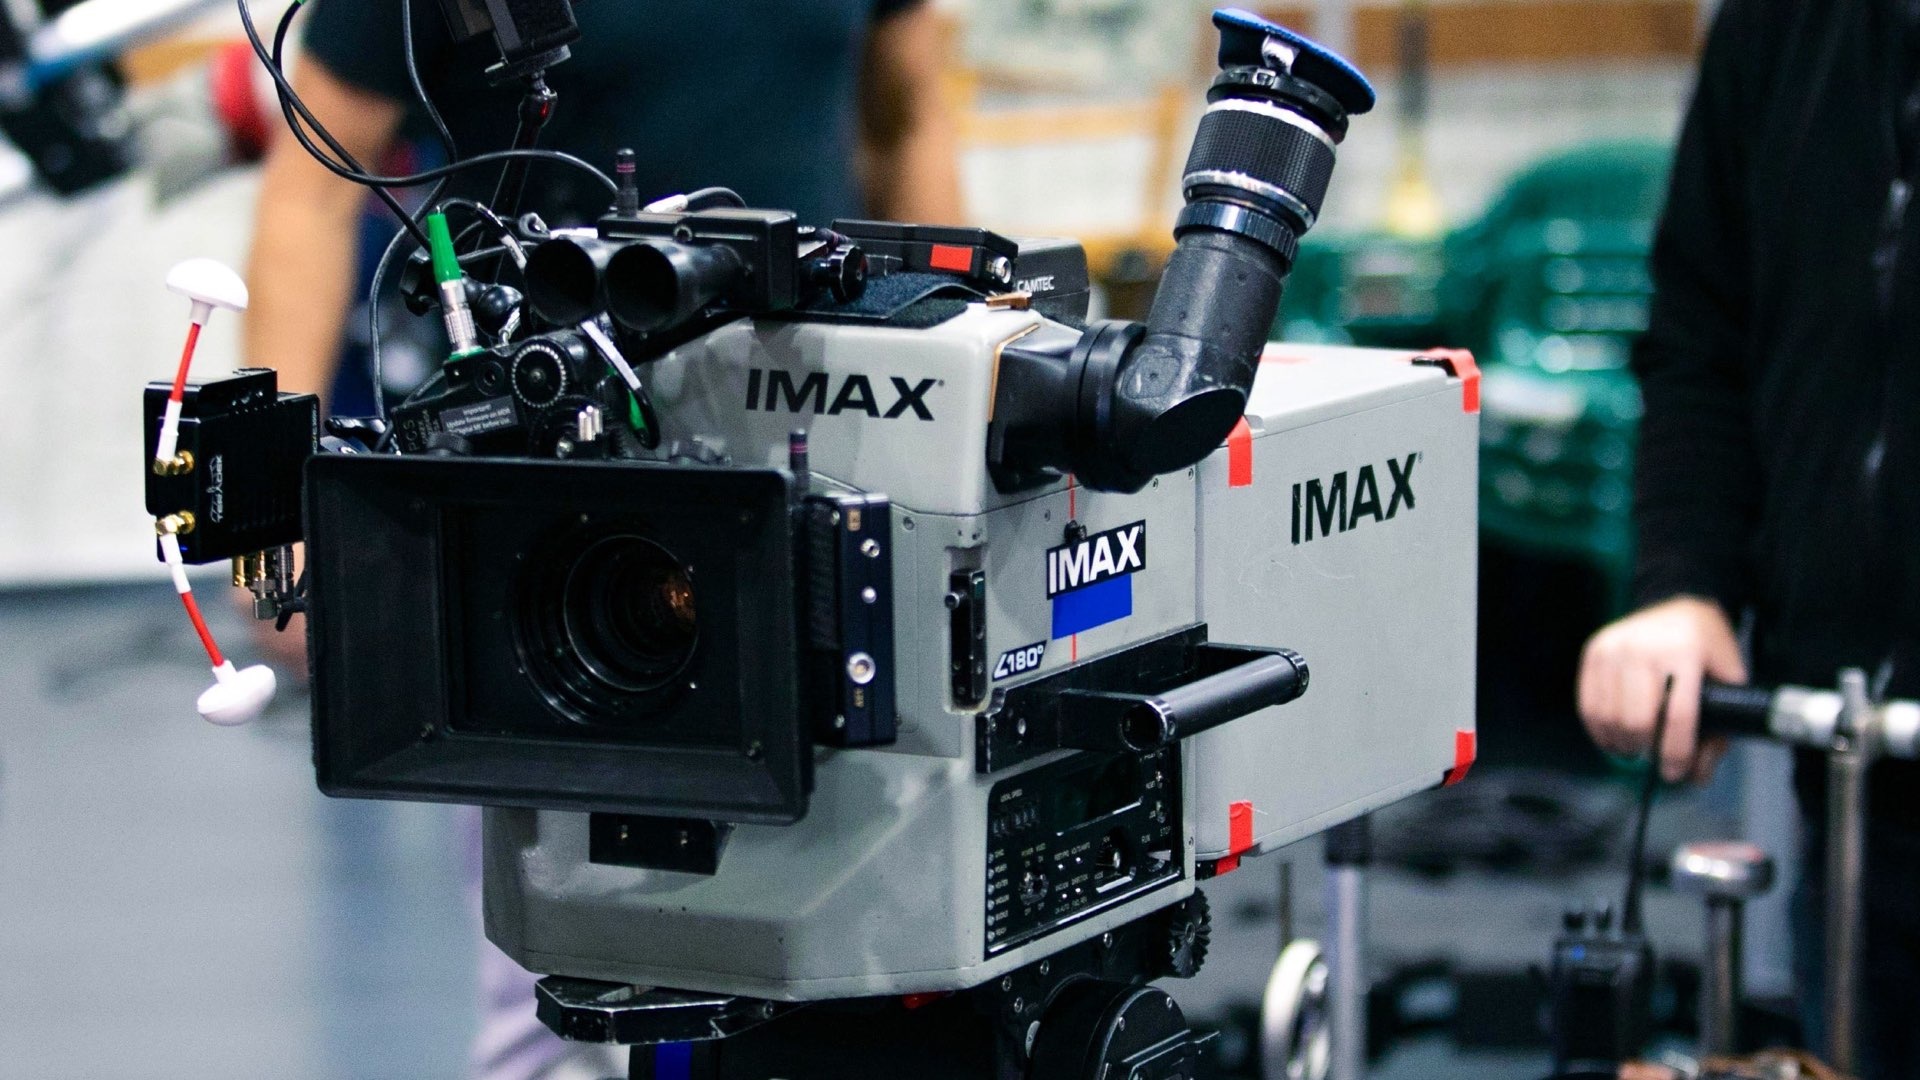 IMAX filmmaking, Shooting on film, Film camera experience, Digital cinema insights, 1920x1080 Full HD Desktop